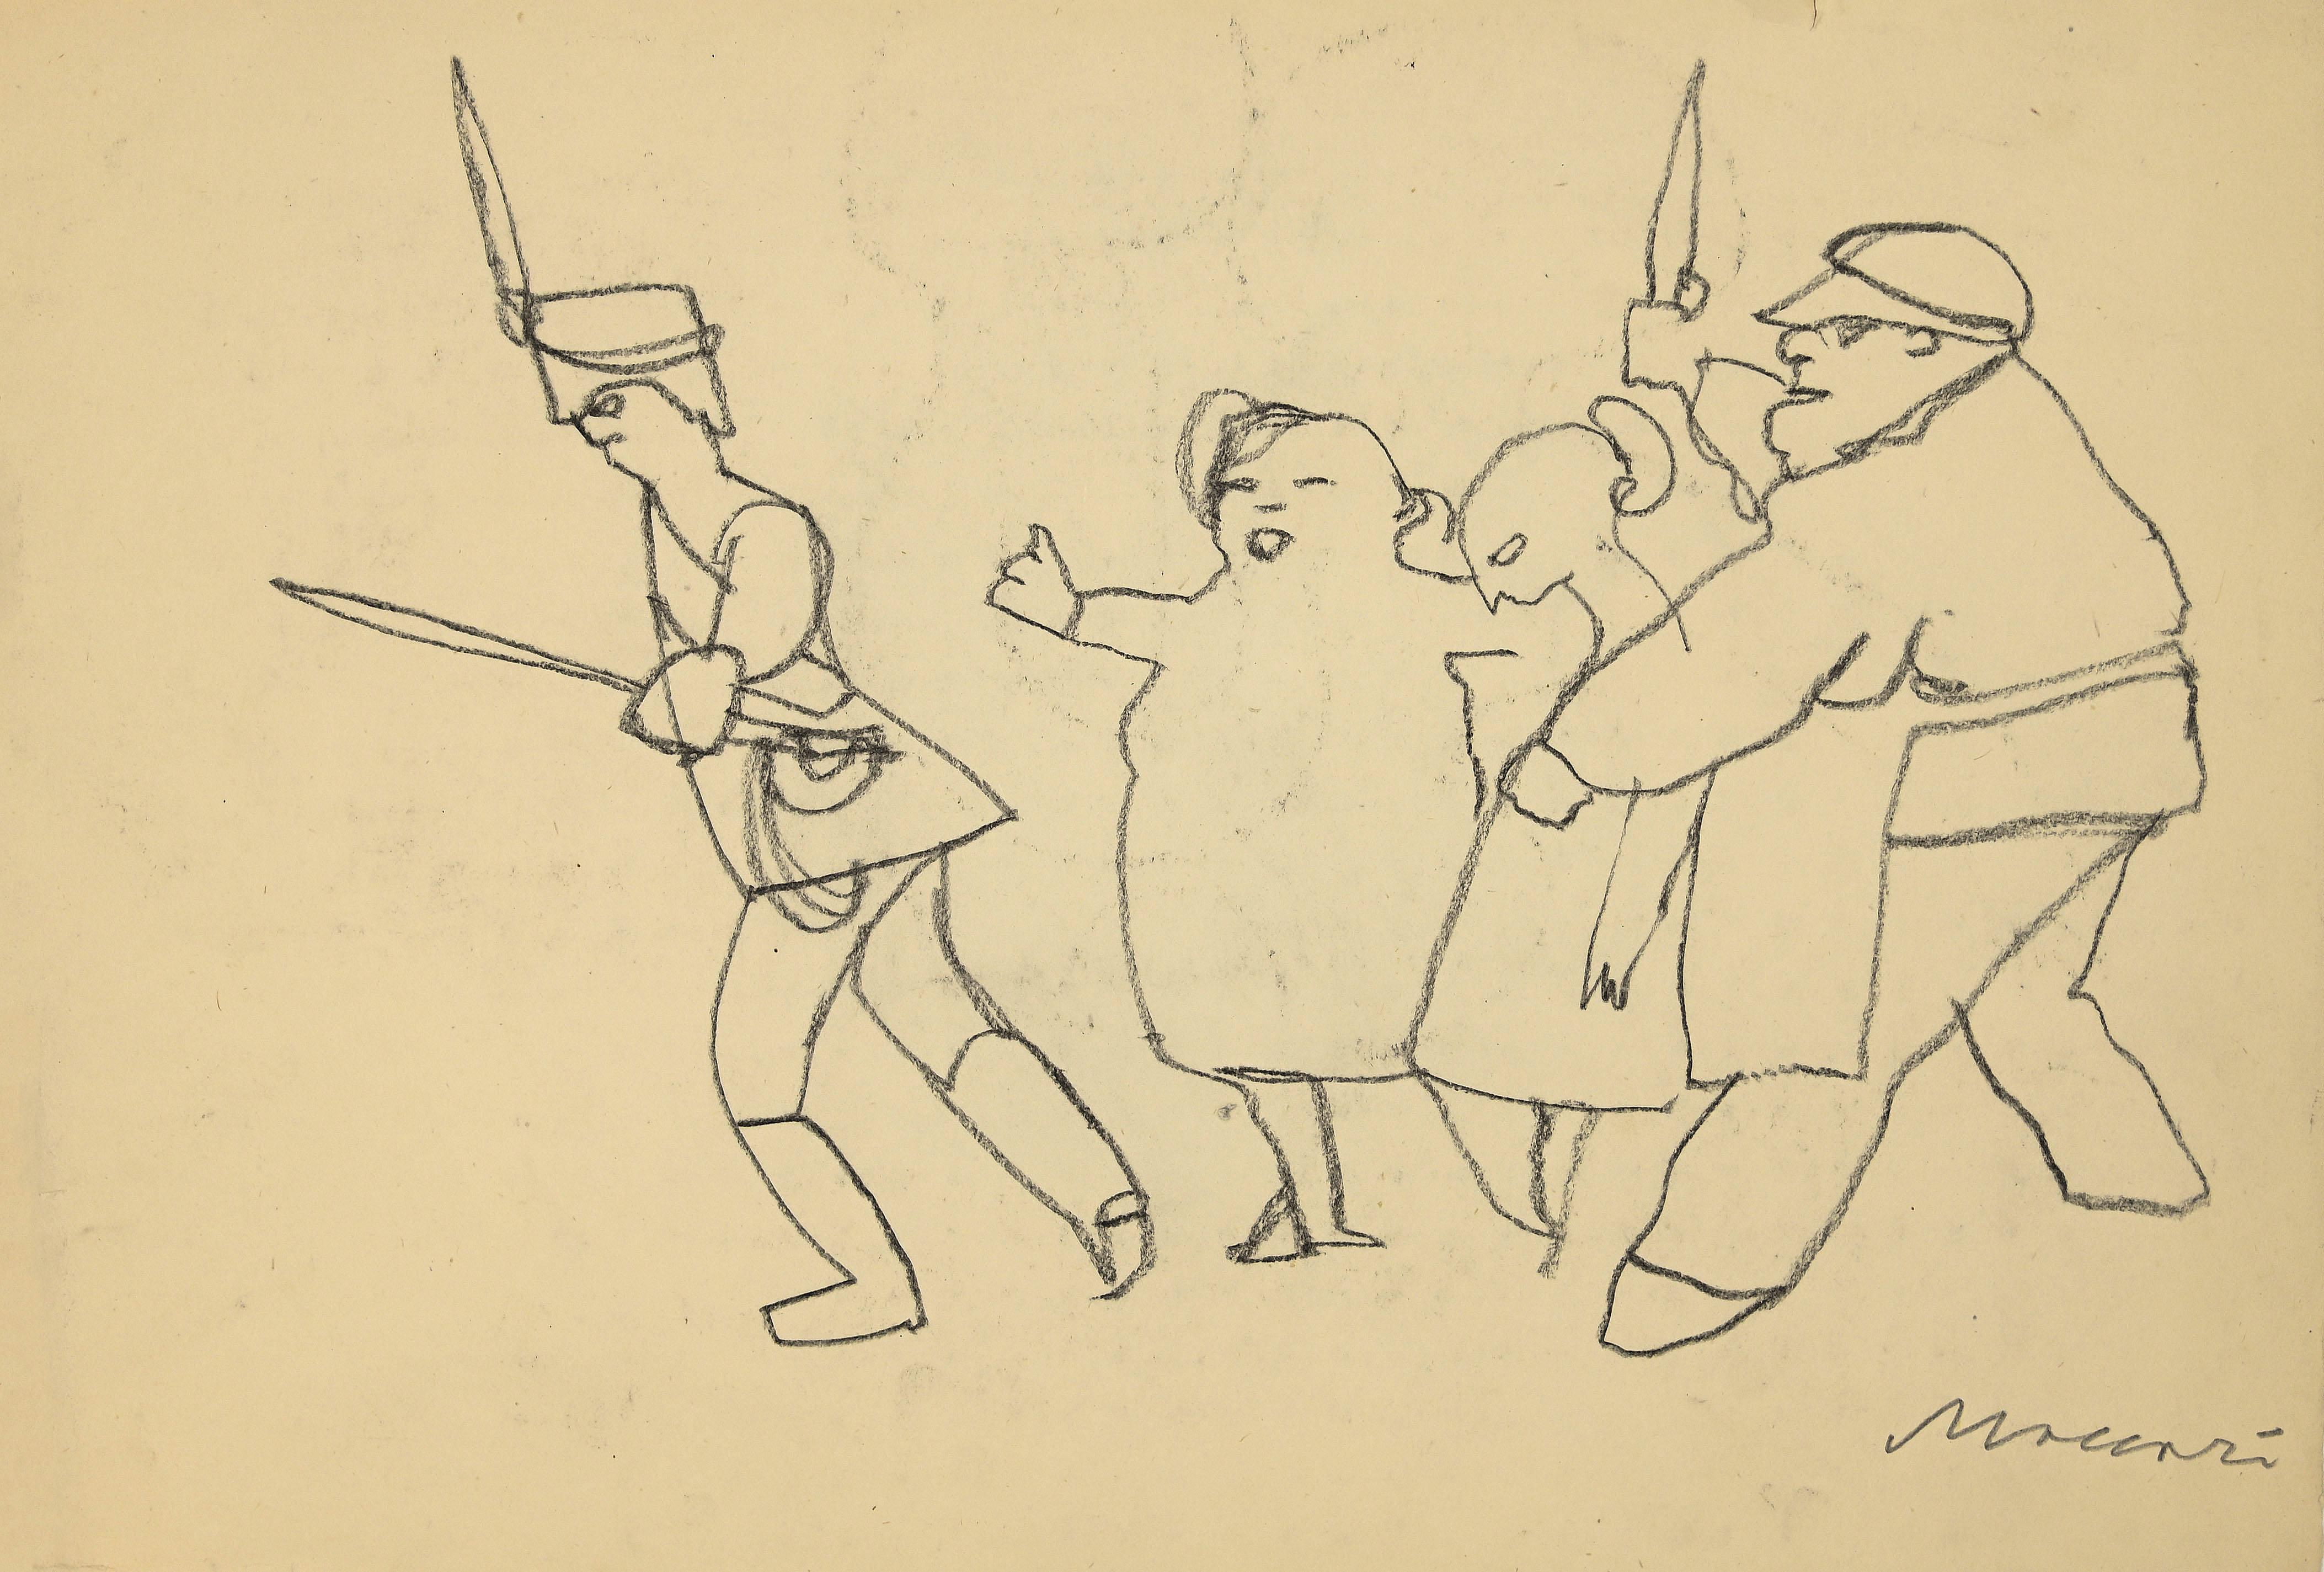 Le dessin au fusain de Mino Maccari - Années 1950